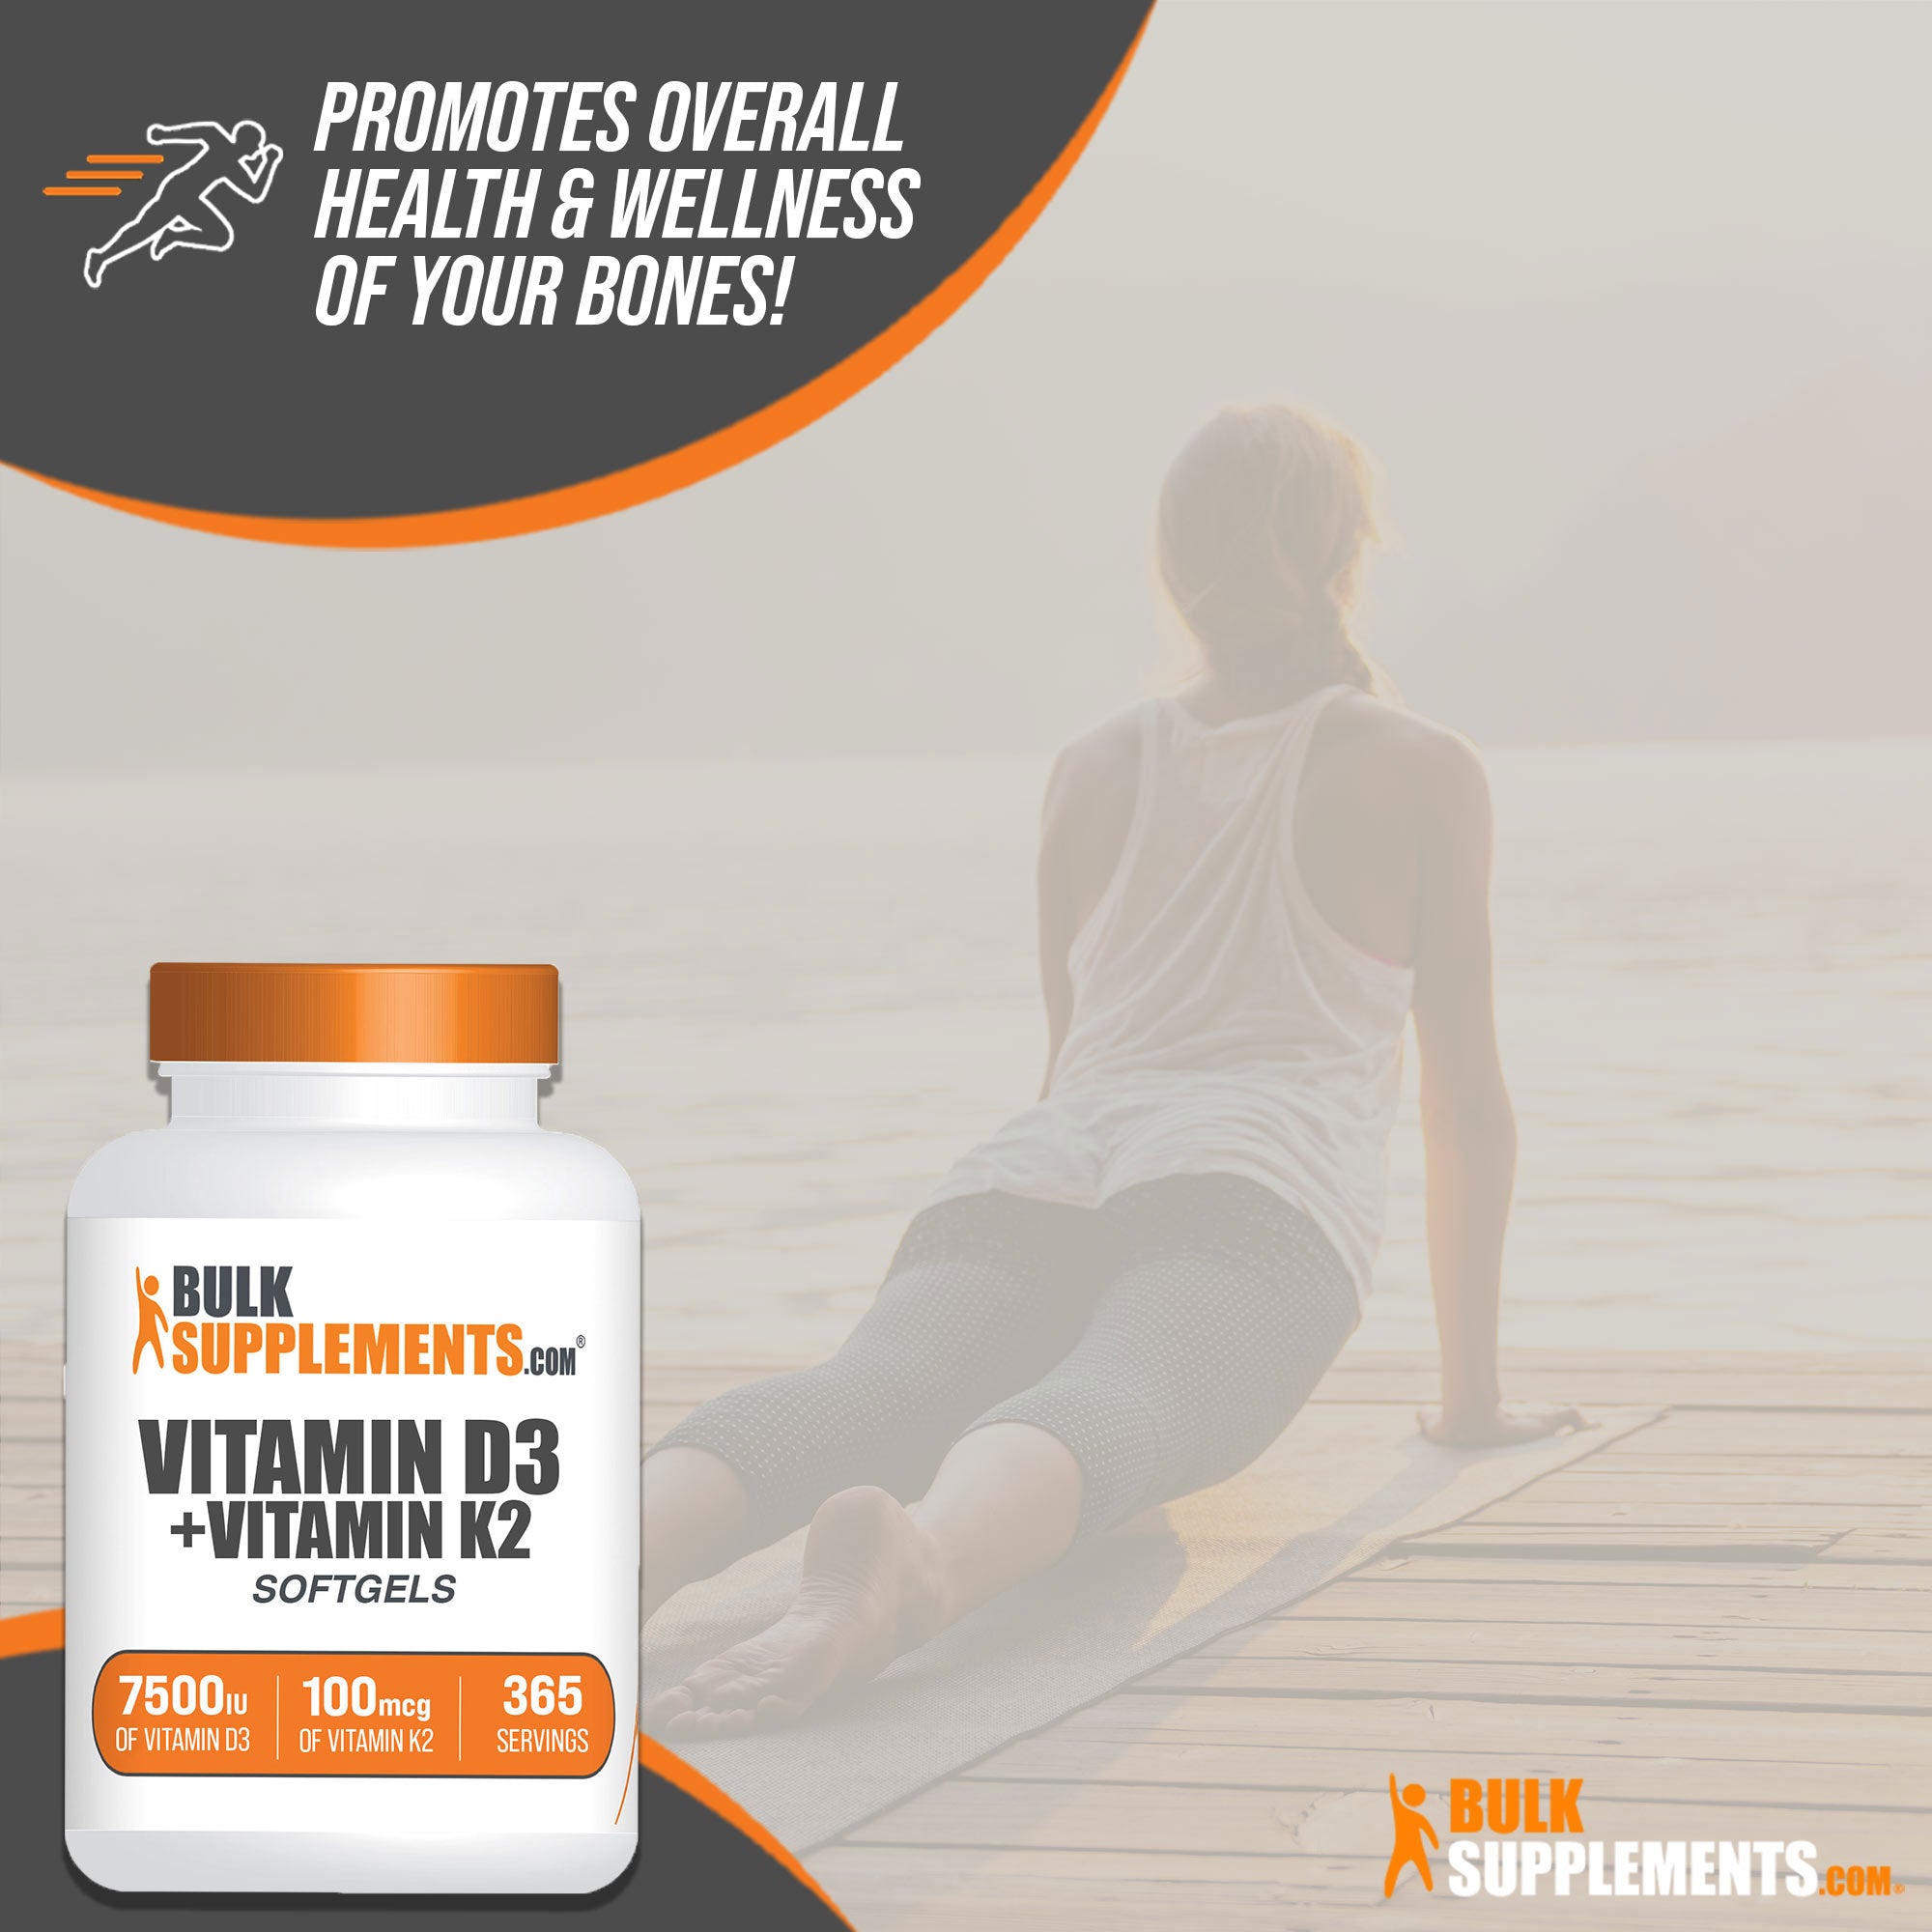 Vitamin D3 + K2 Softgels overall wellness benefit